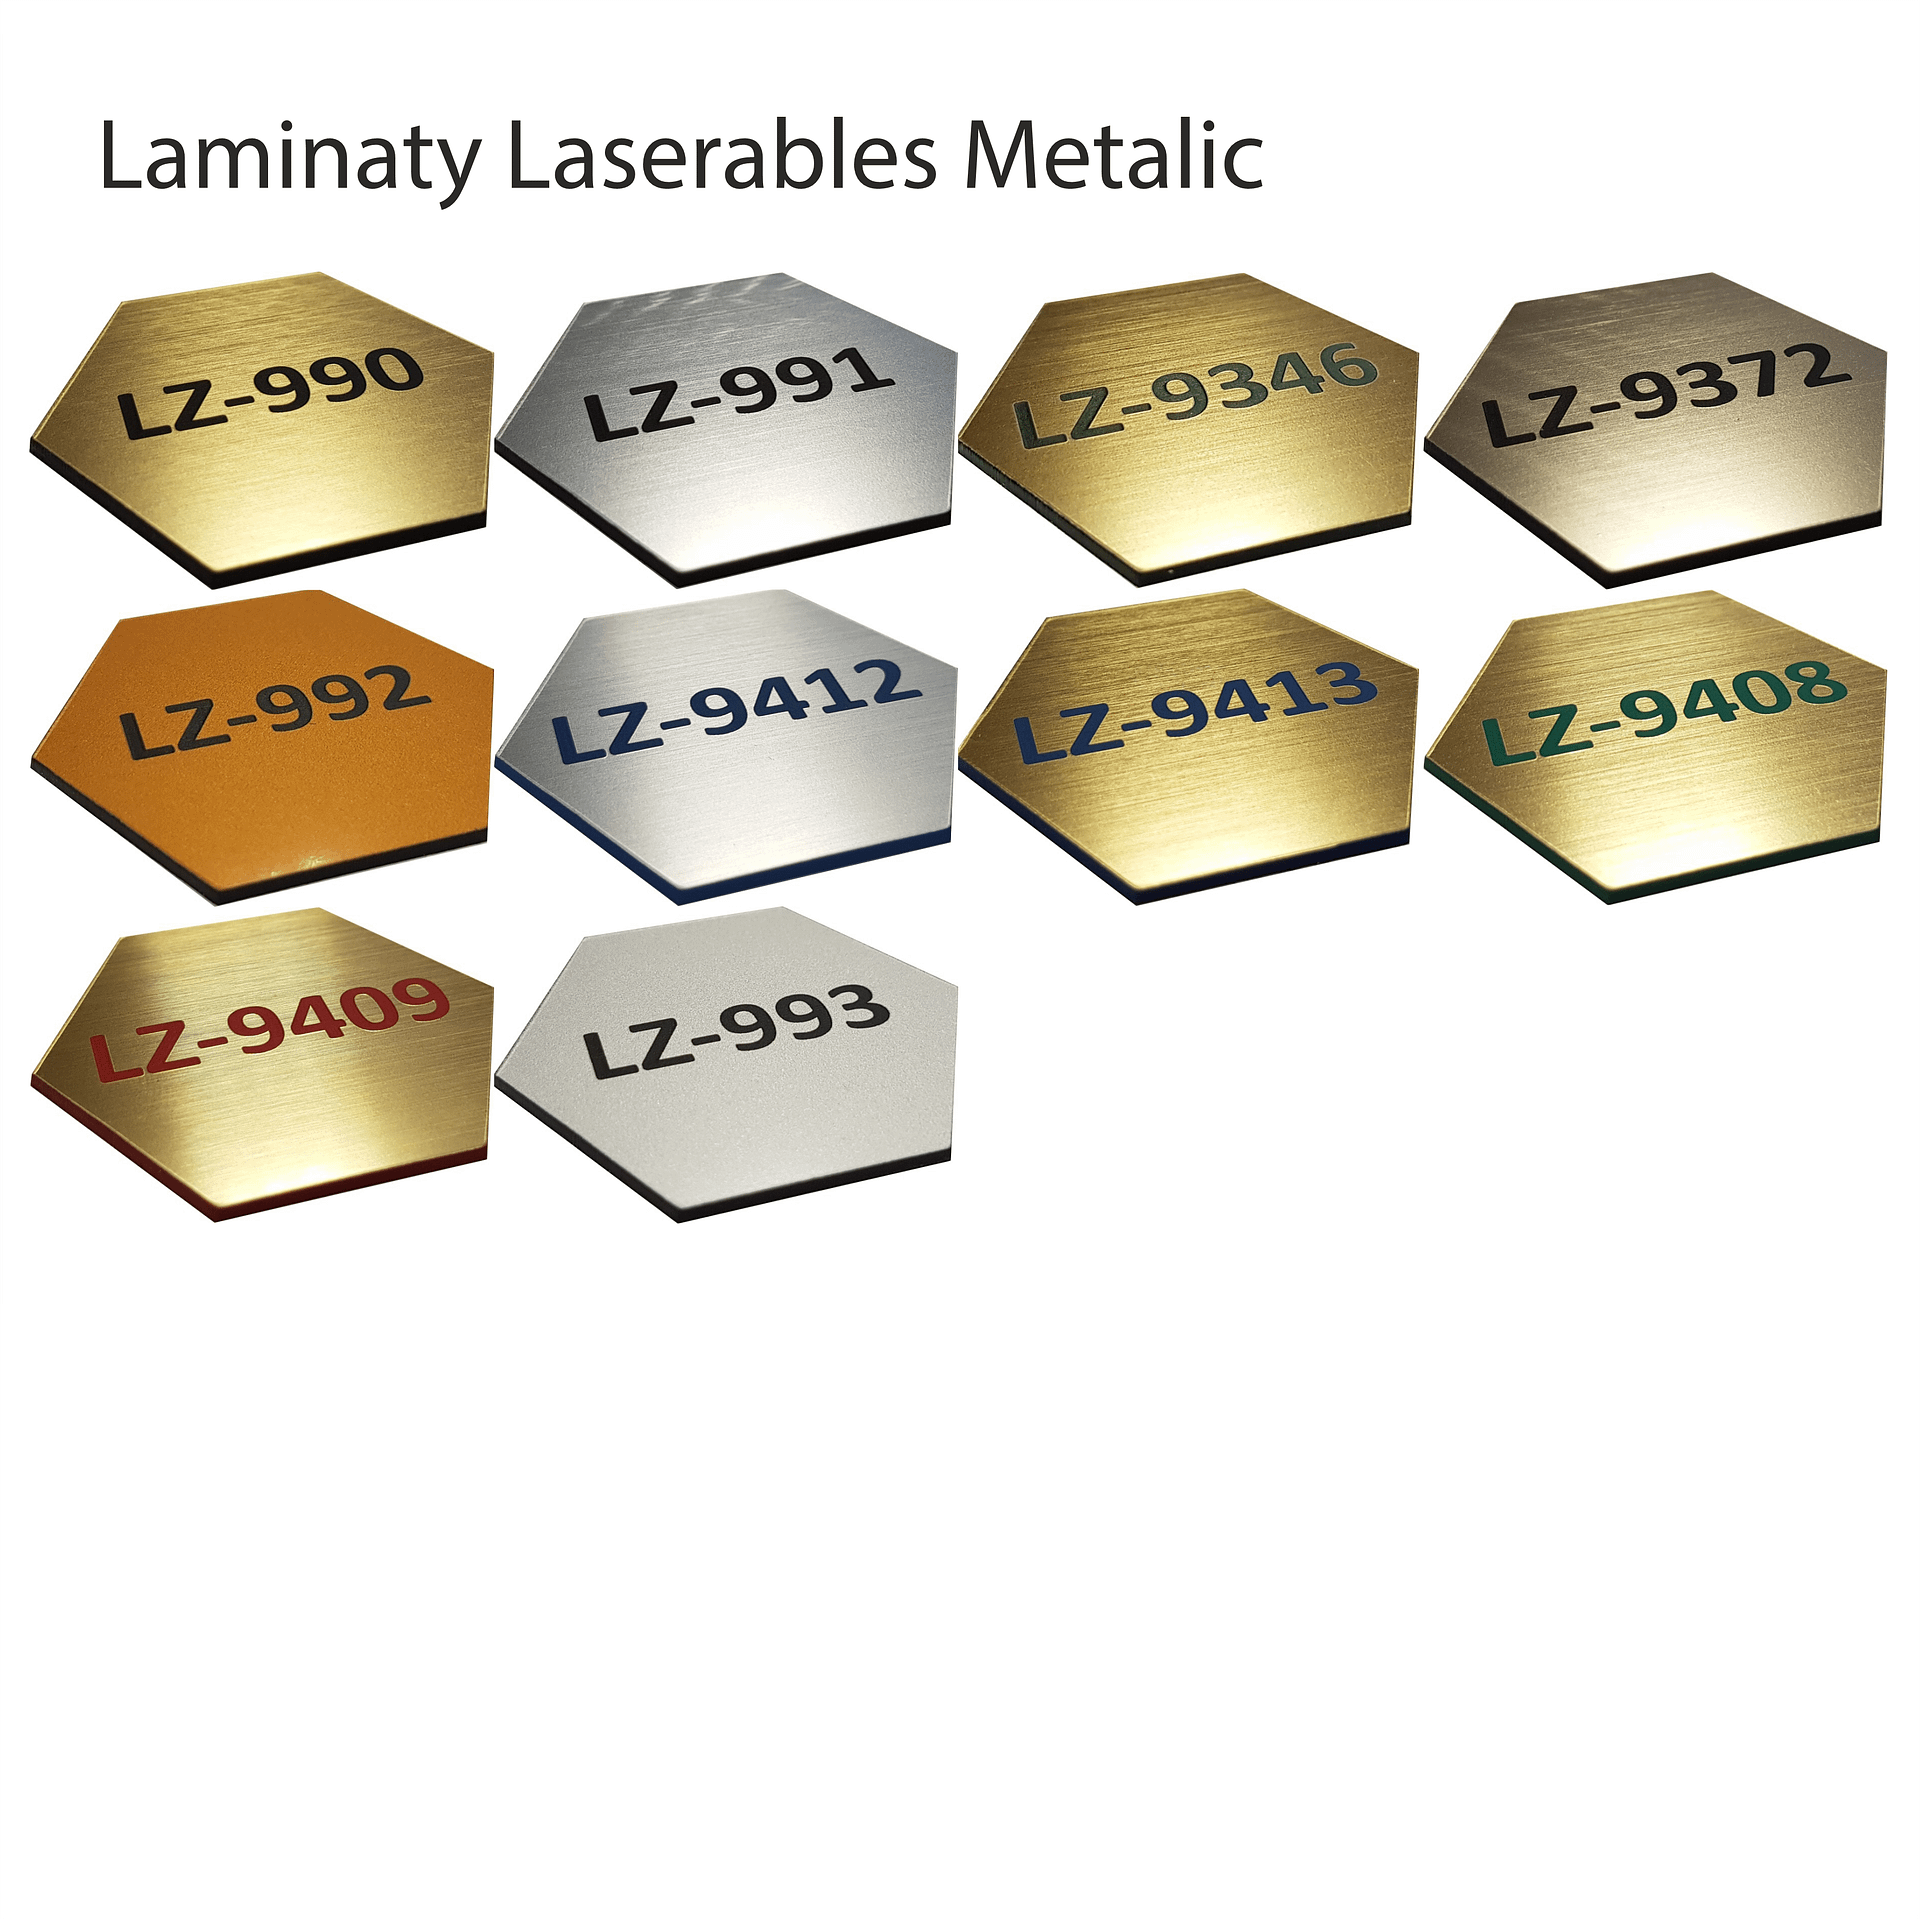 Laminaty Laserables Metalix